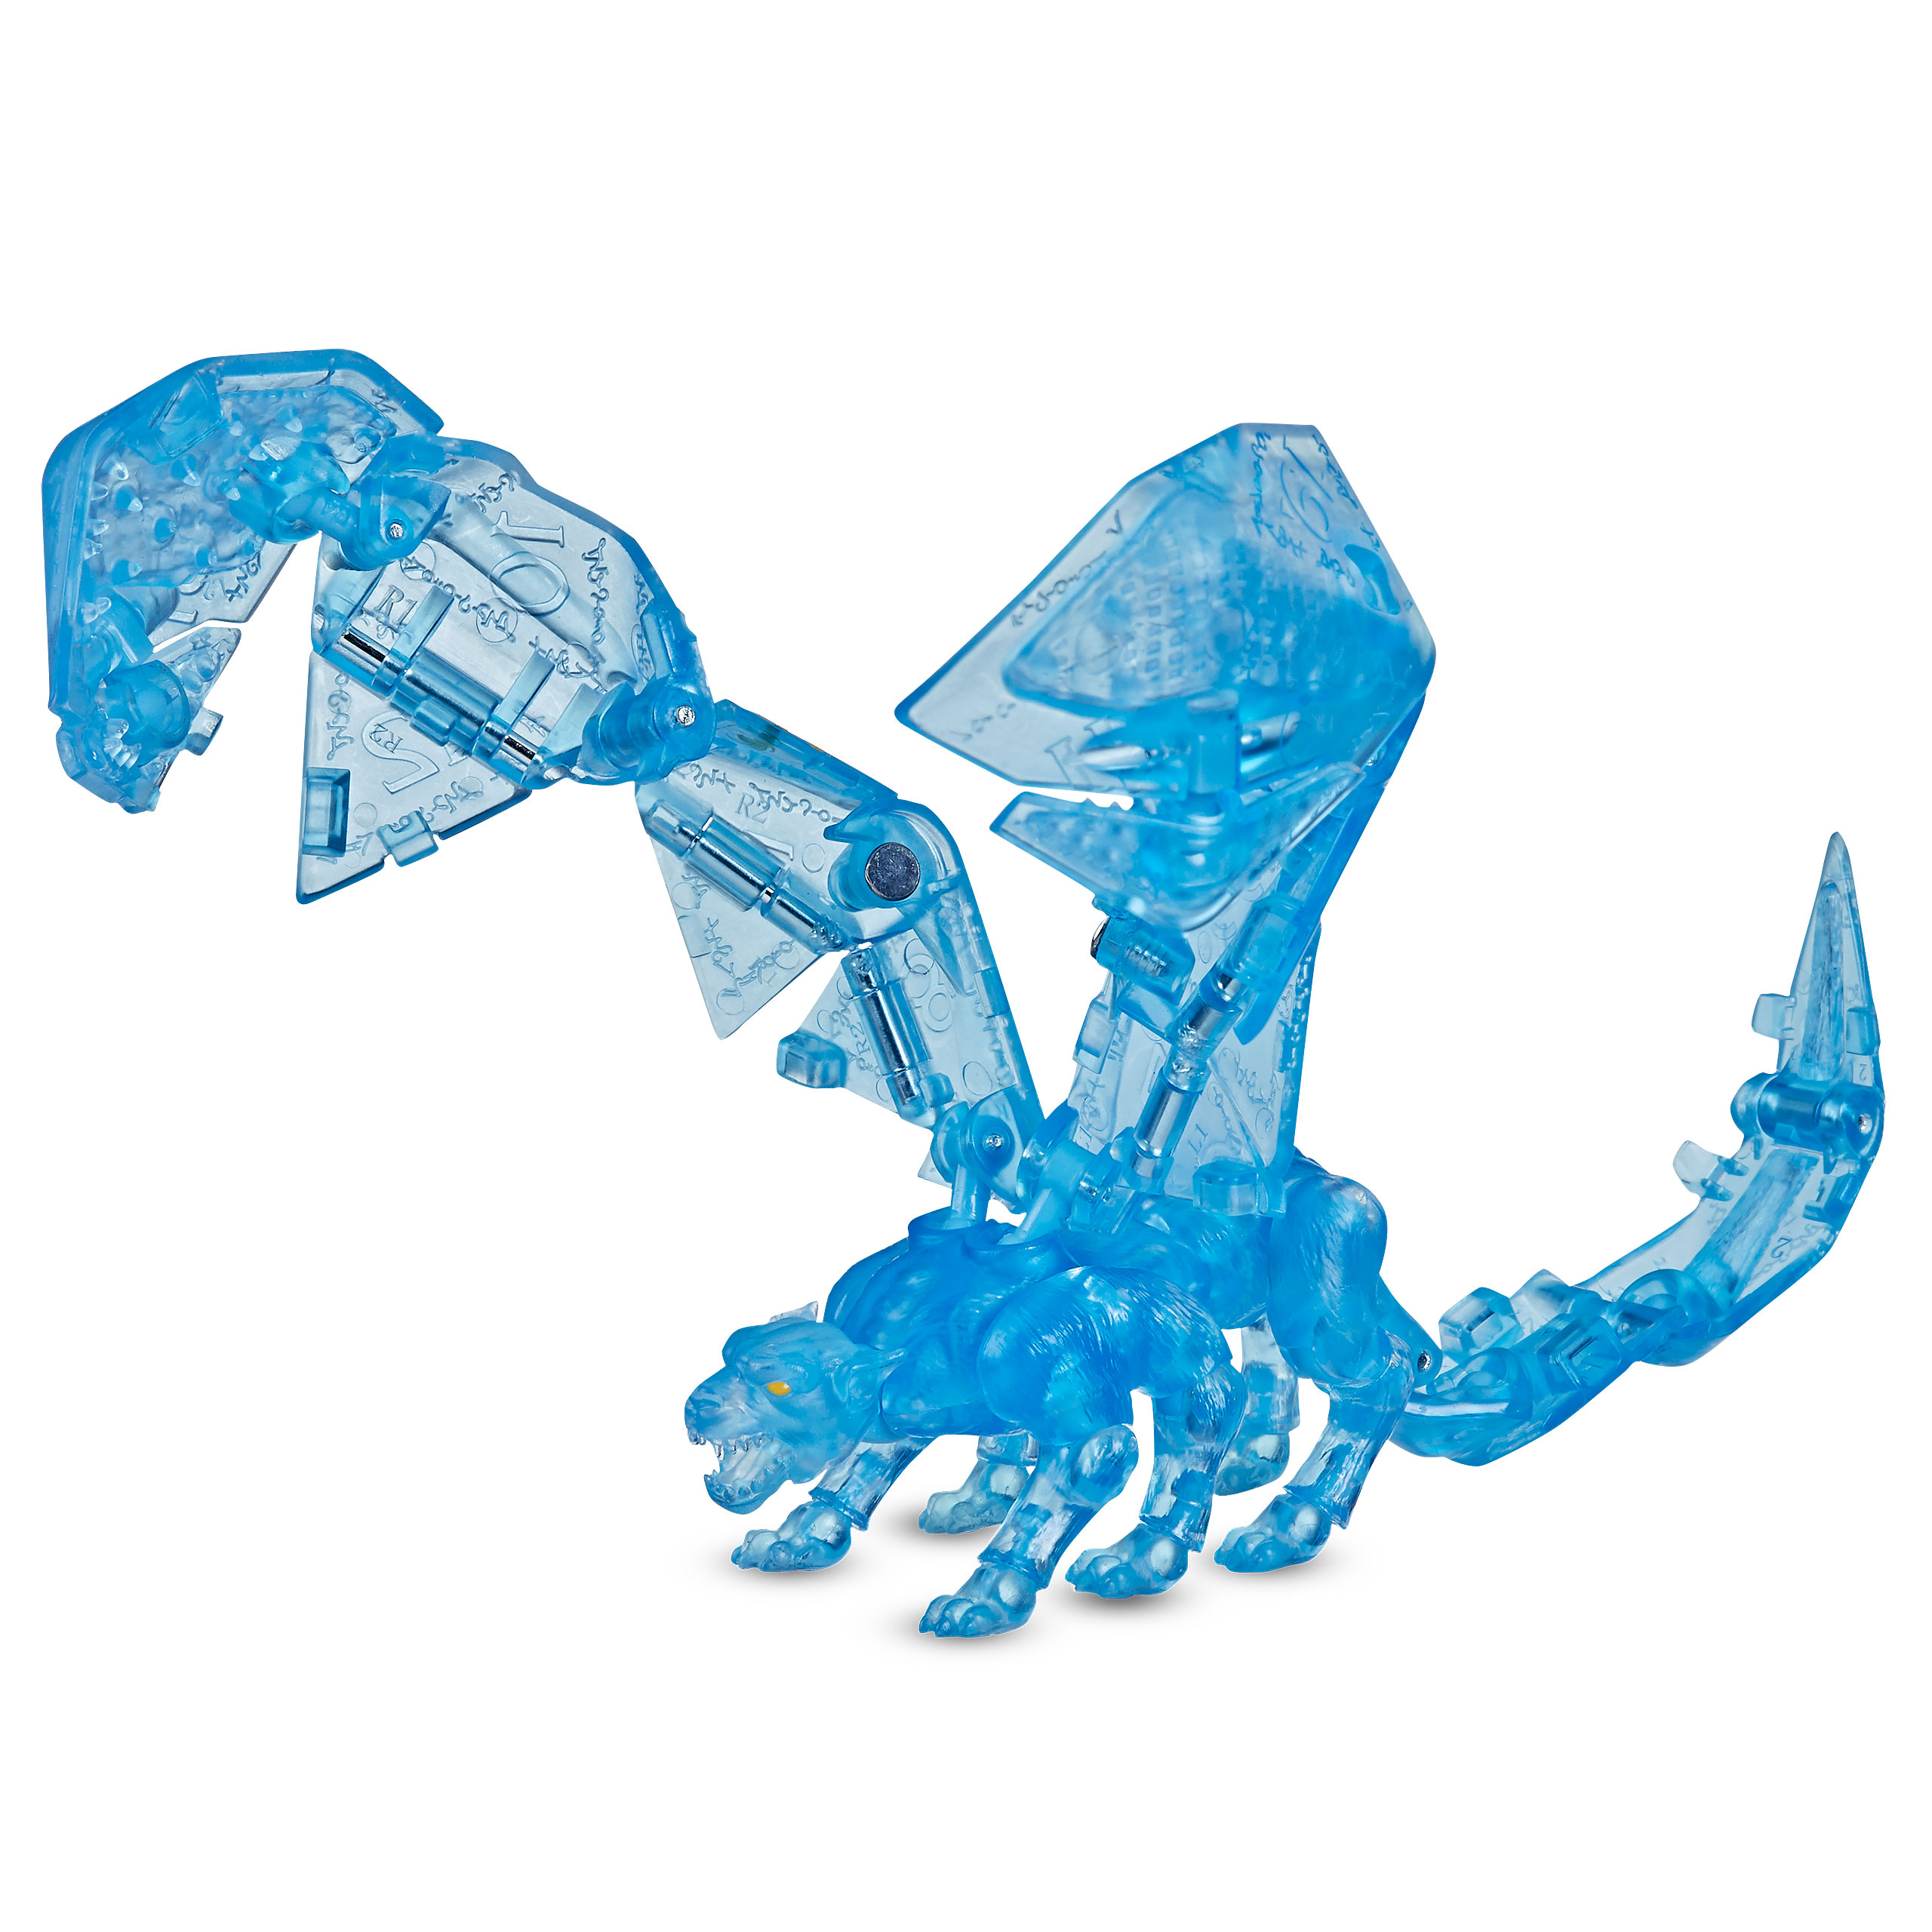 Dungeons & Dragons - Blue Displacer Dicelings Action Figure